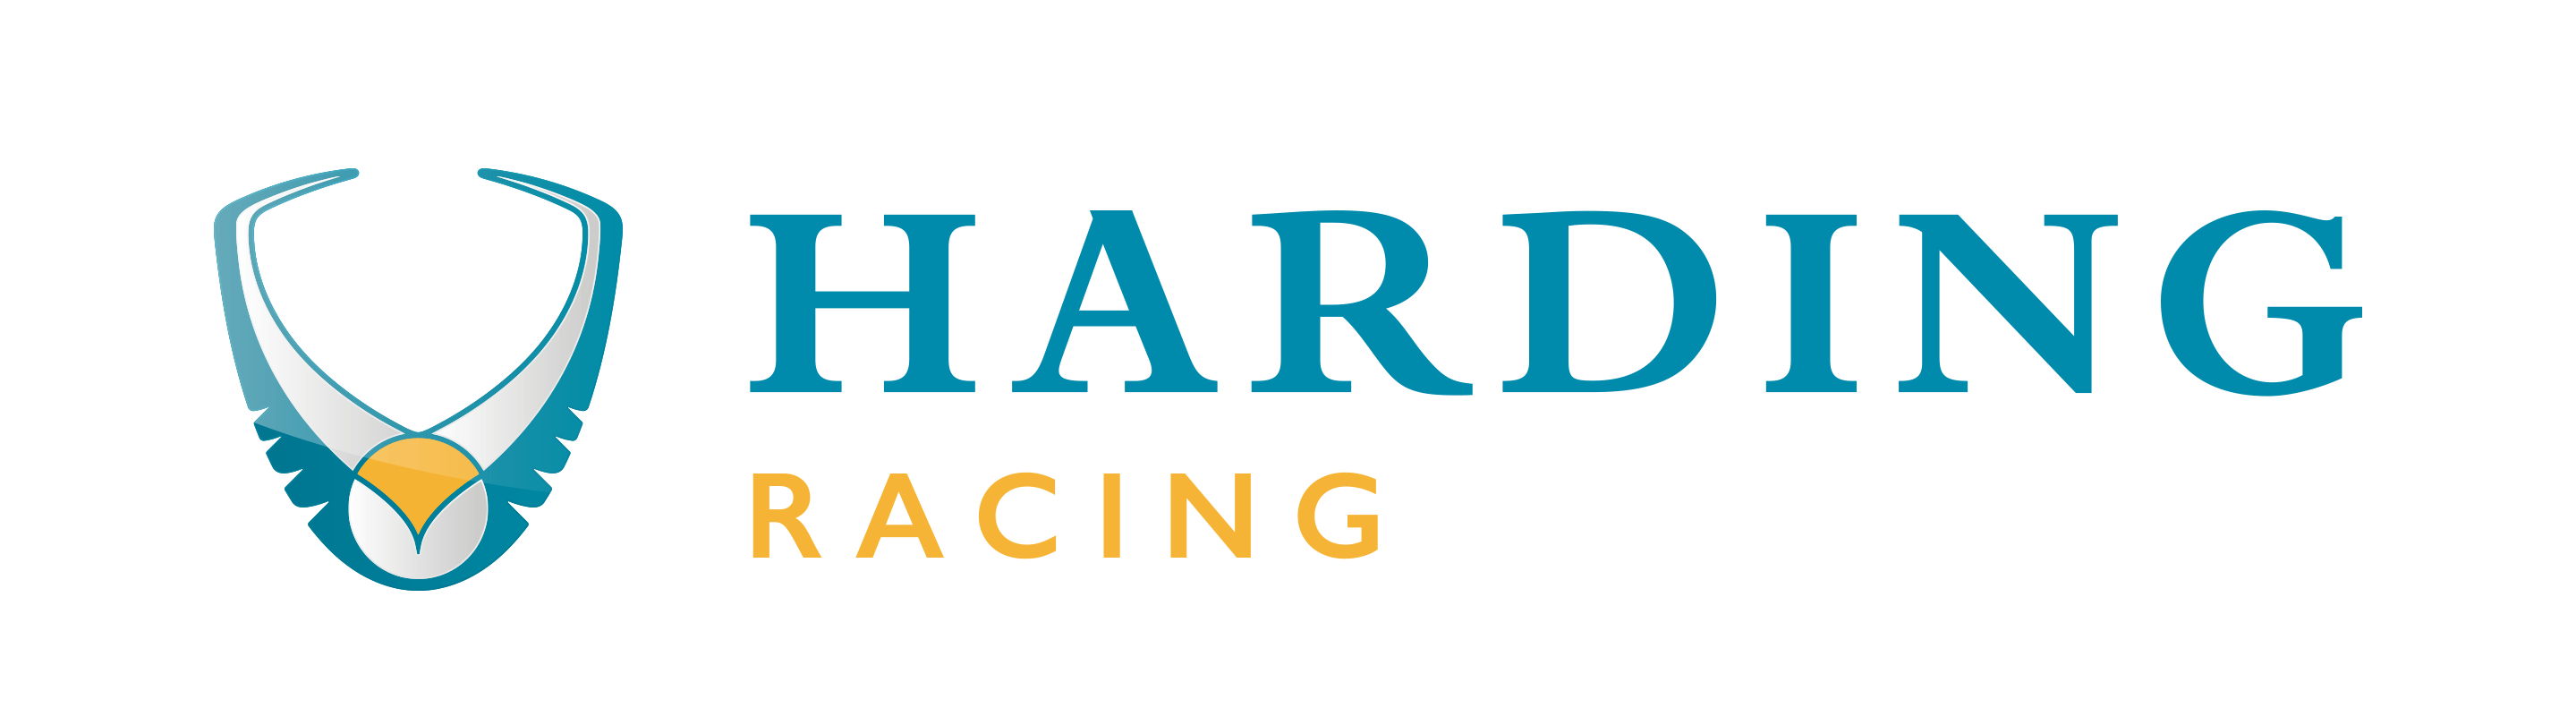 Family Racing Logo - Harding Racing - SmallBox